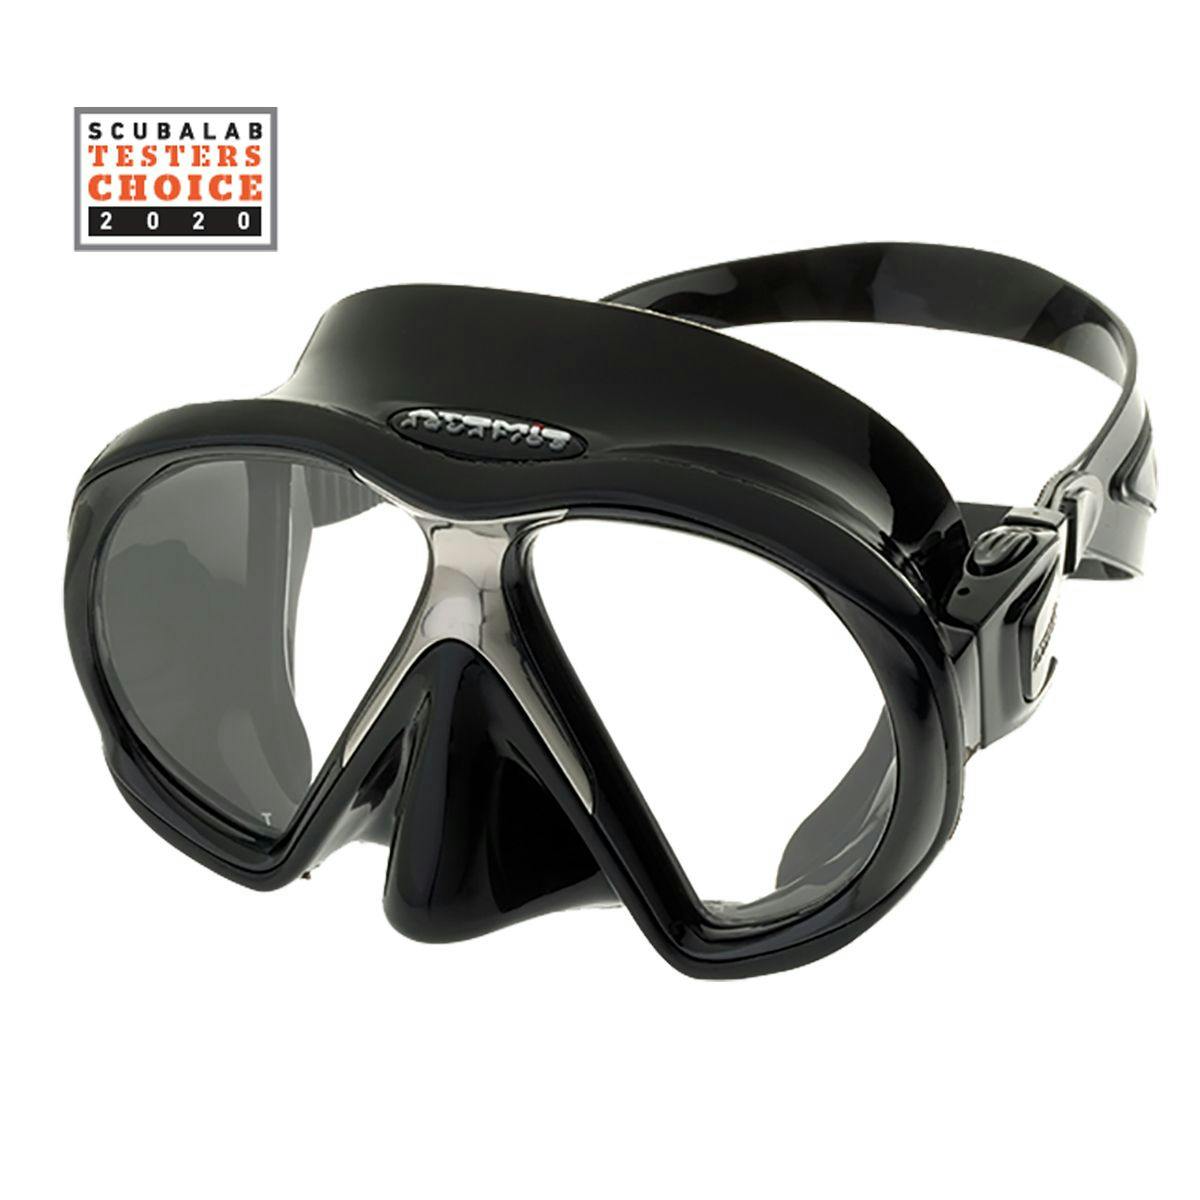 Atomic SubFrame Mask, Two Lens (Medium Fit) - Black/Black